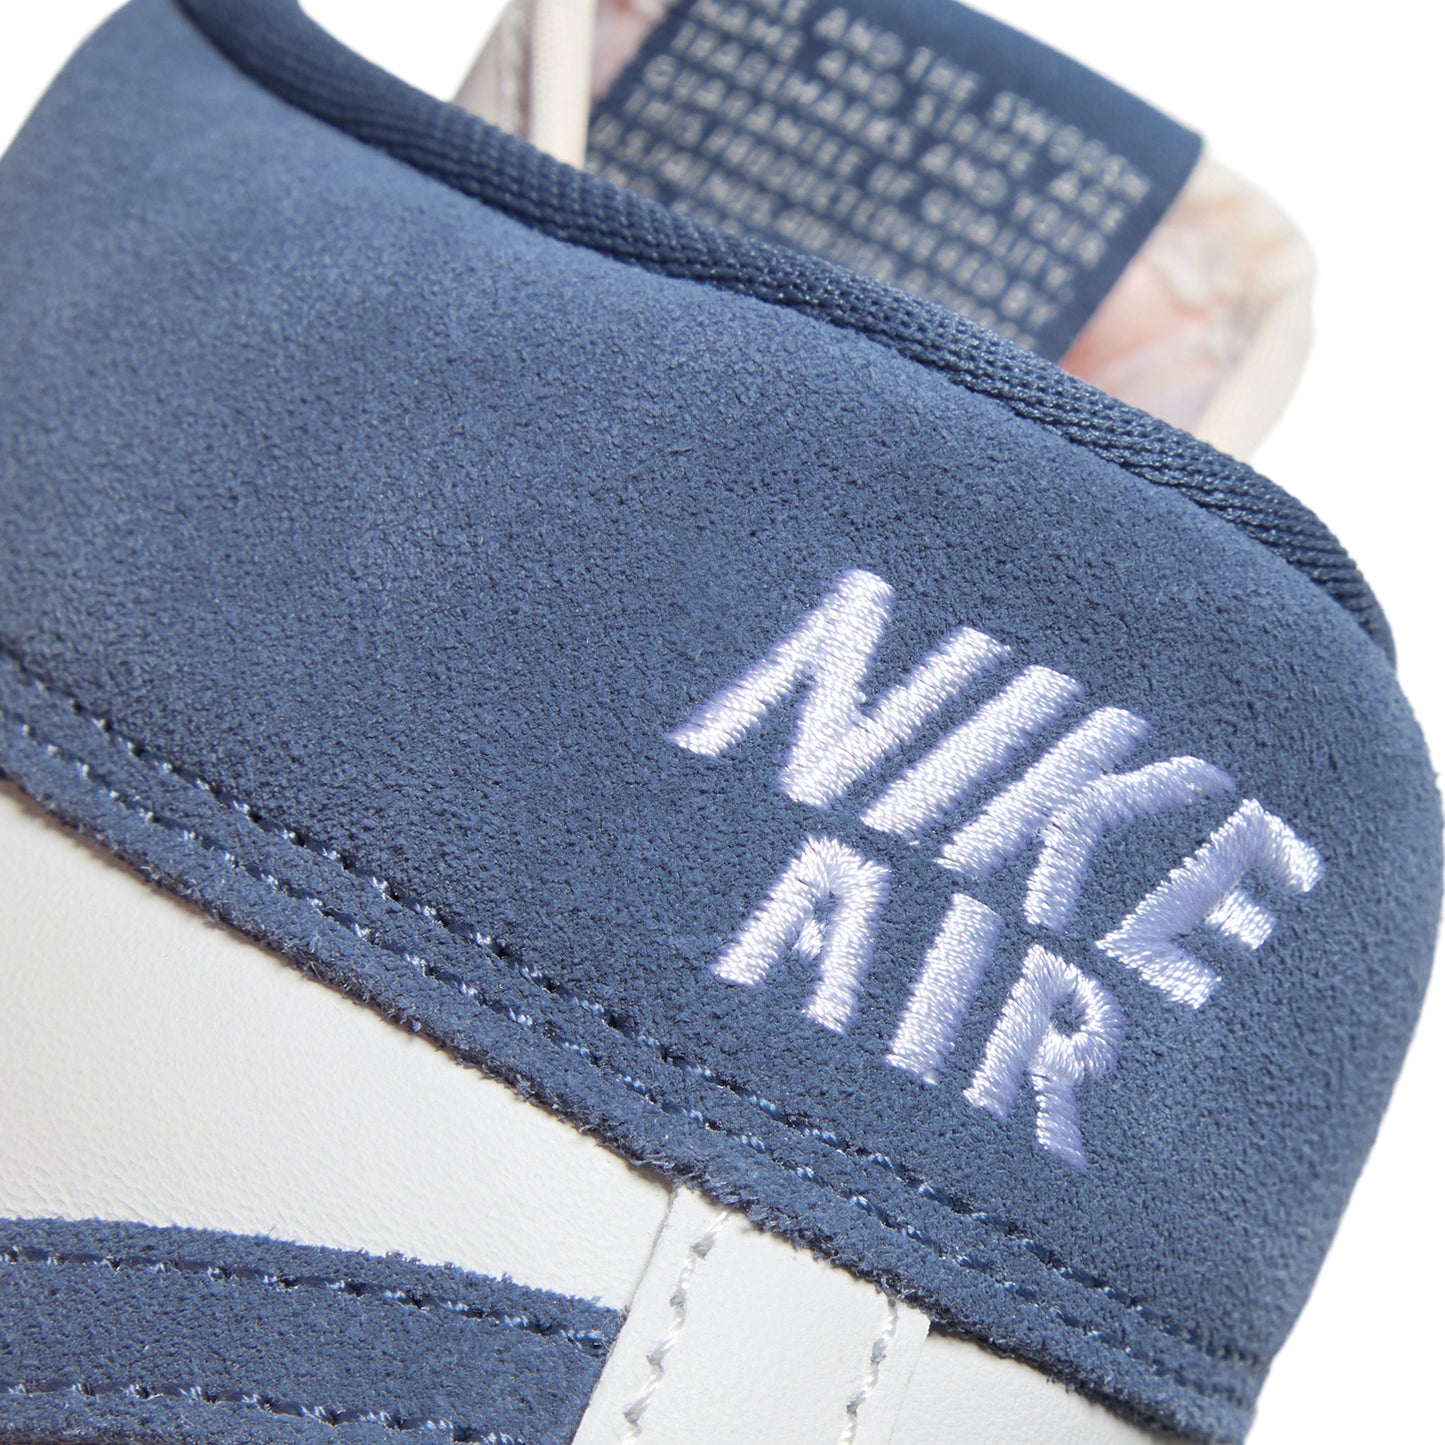 Nike Jordan Air Ship PE SP (Summit White/Diffused Blue)